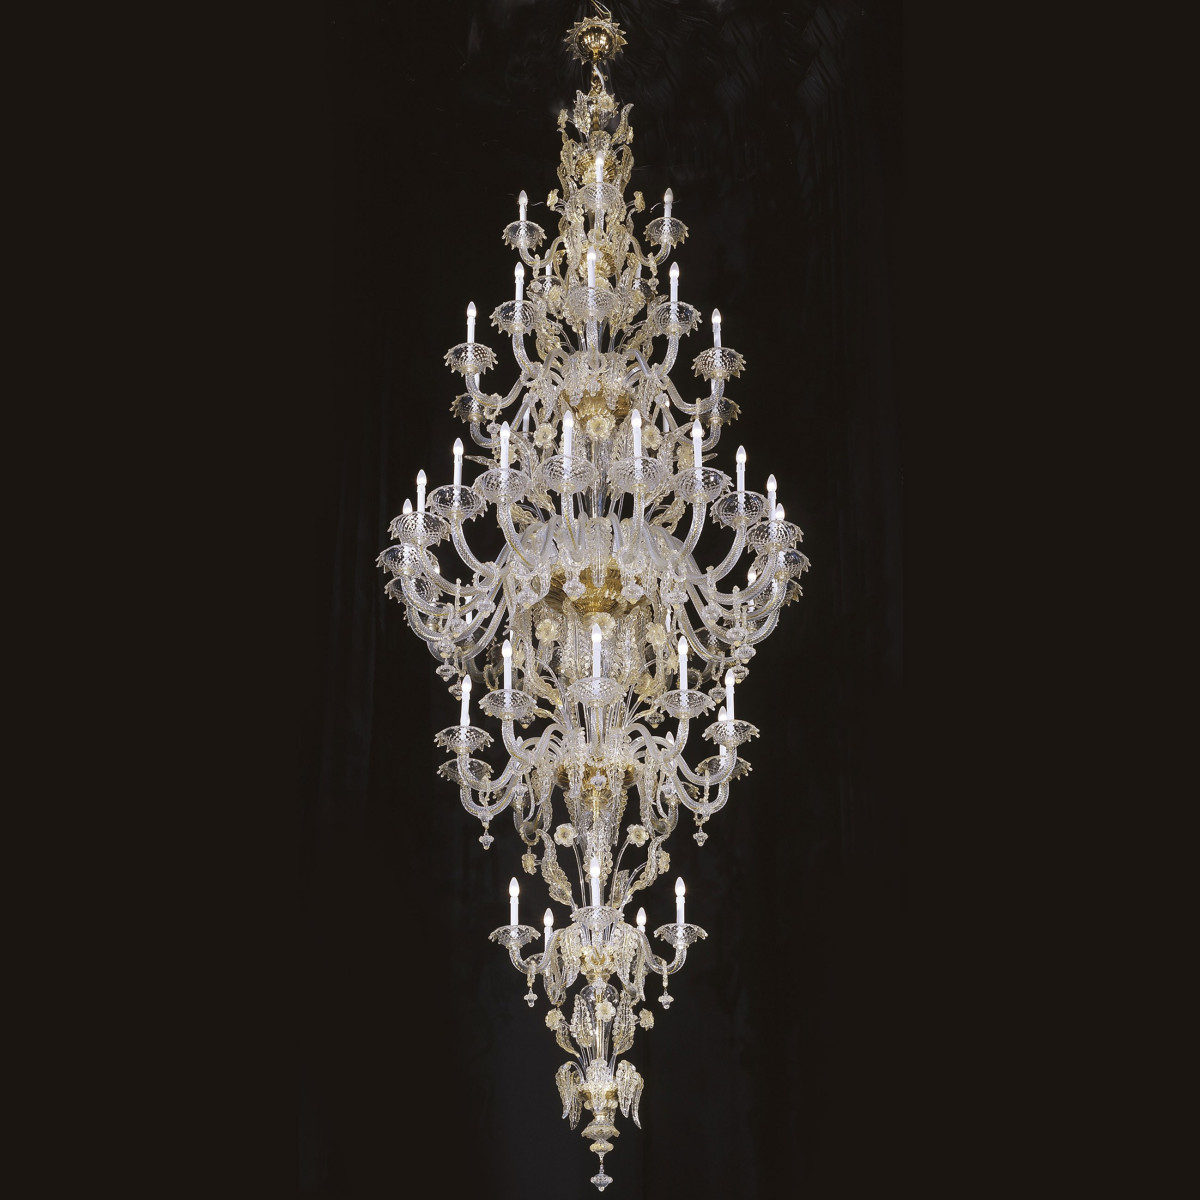 "Barberini" Murano glass chandelier -  50 lights